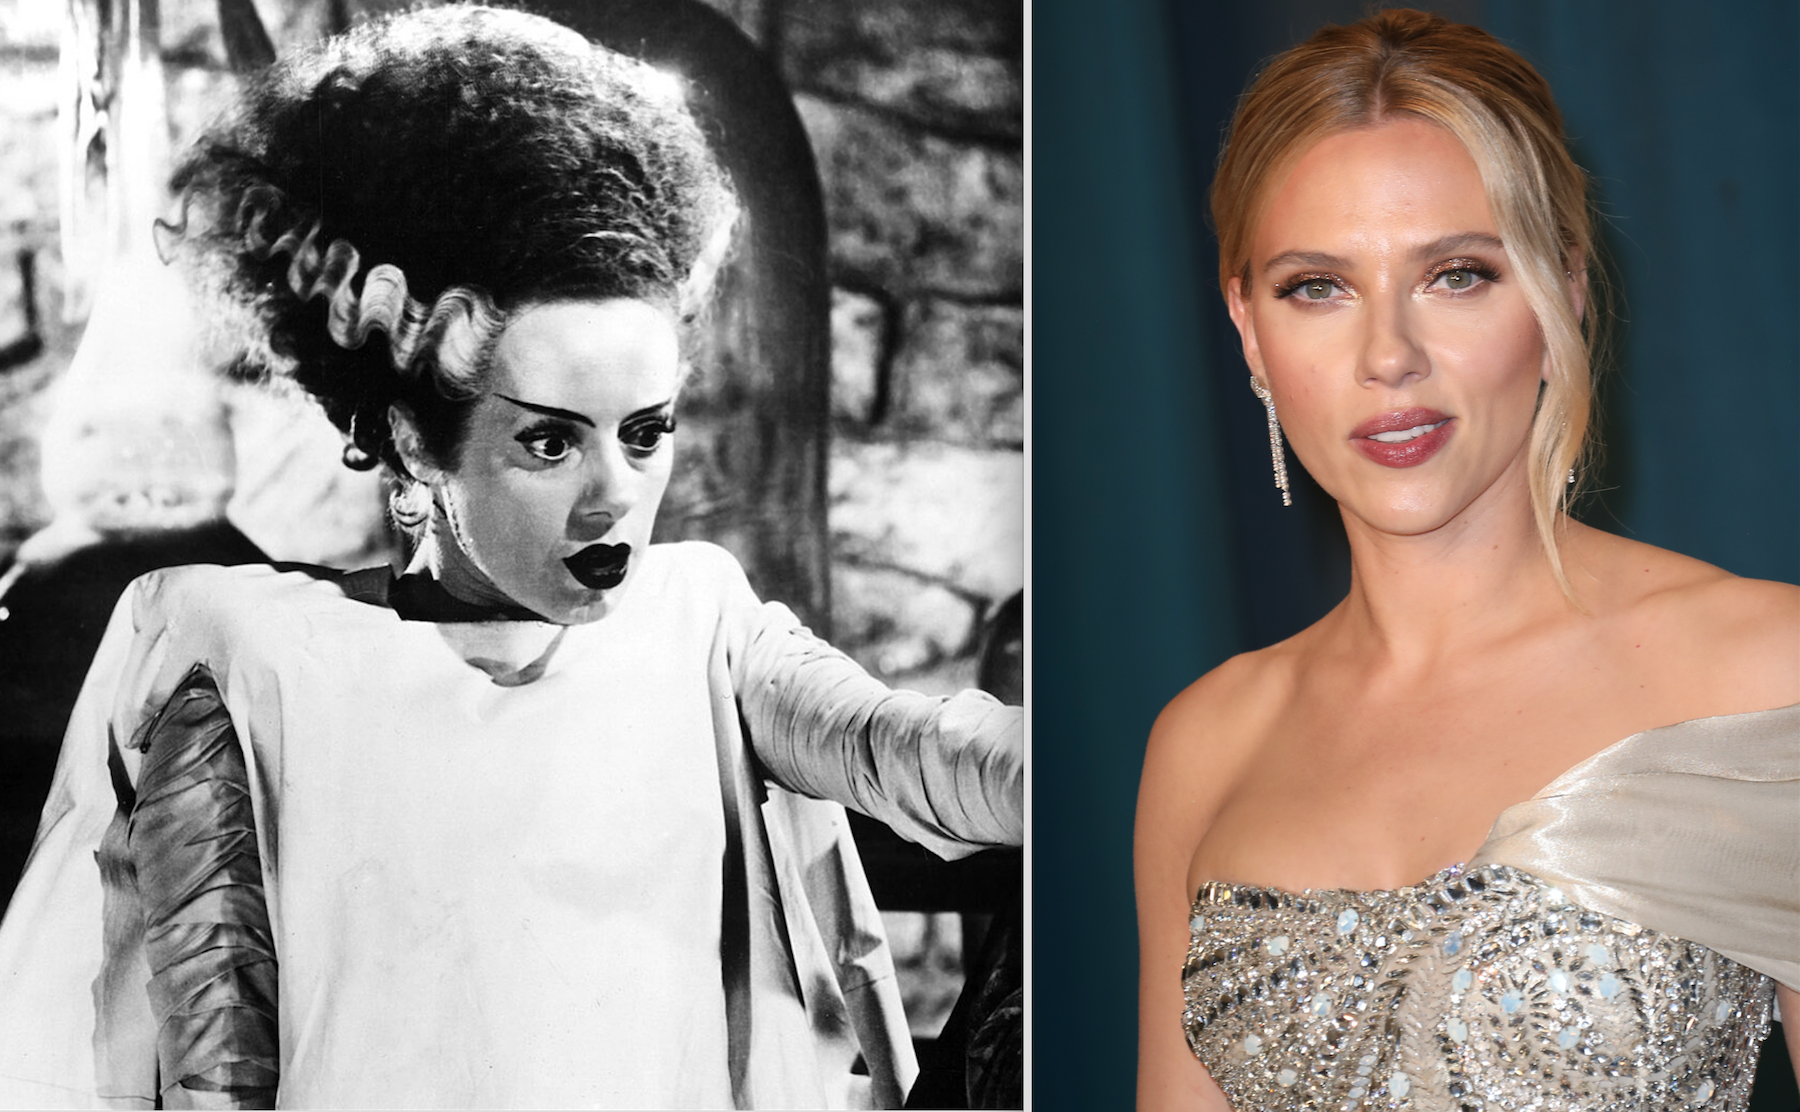 Scarlett Johansson to Star as Bride of Frankenstein for A24